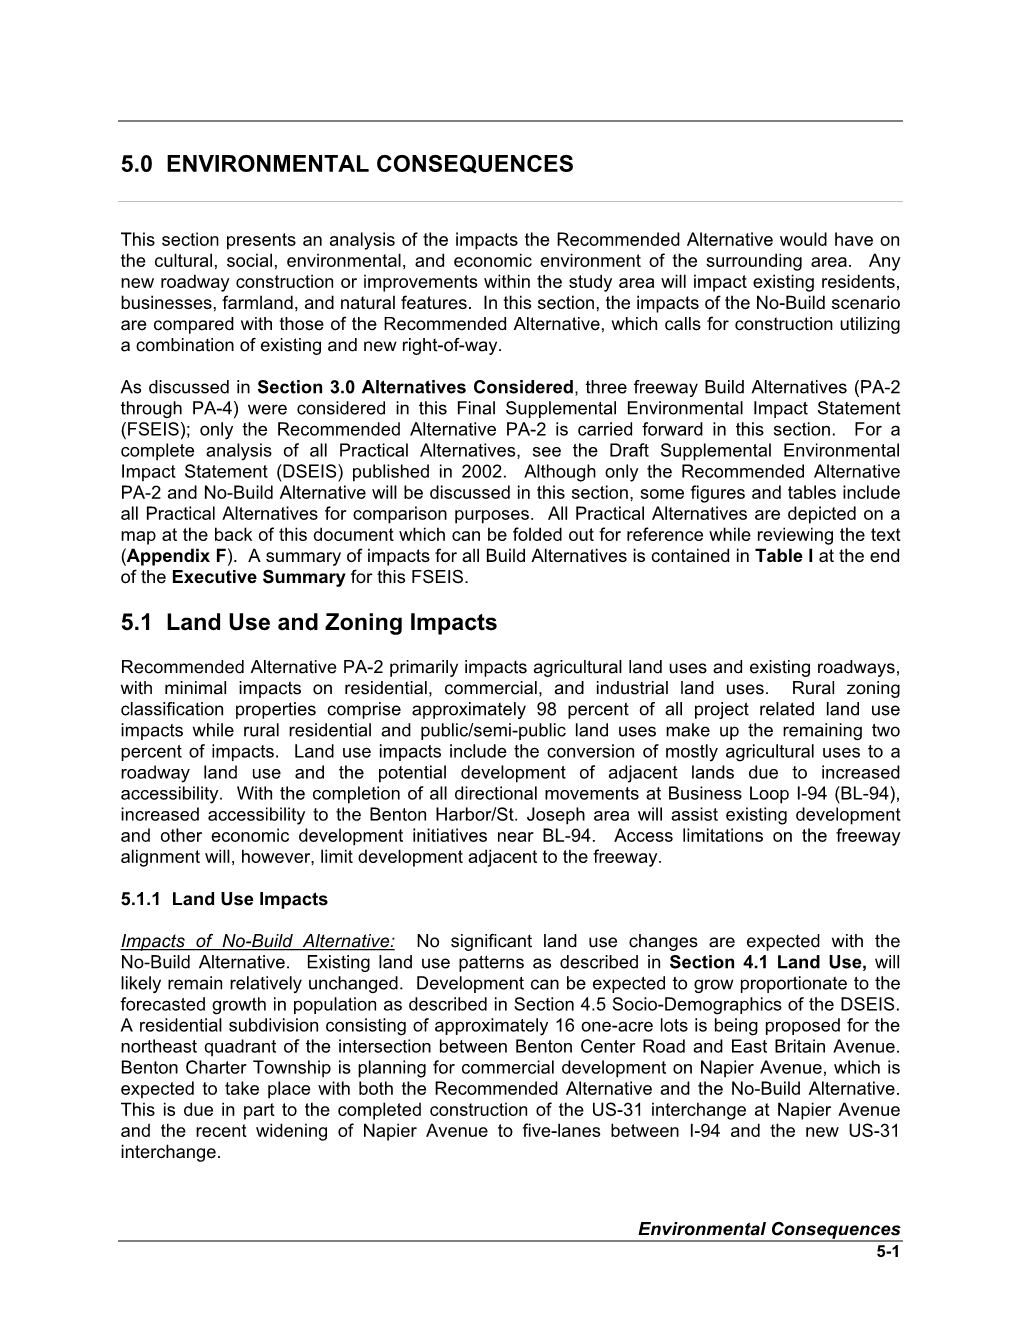 Section 5.0 Environmental Consequences